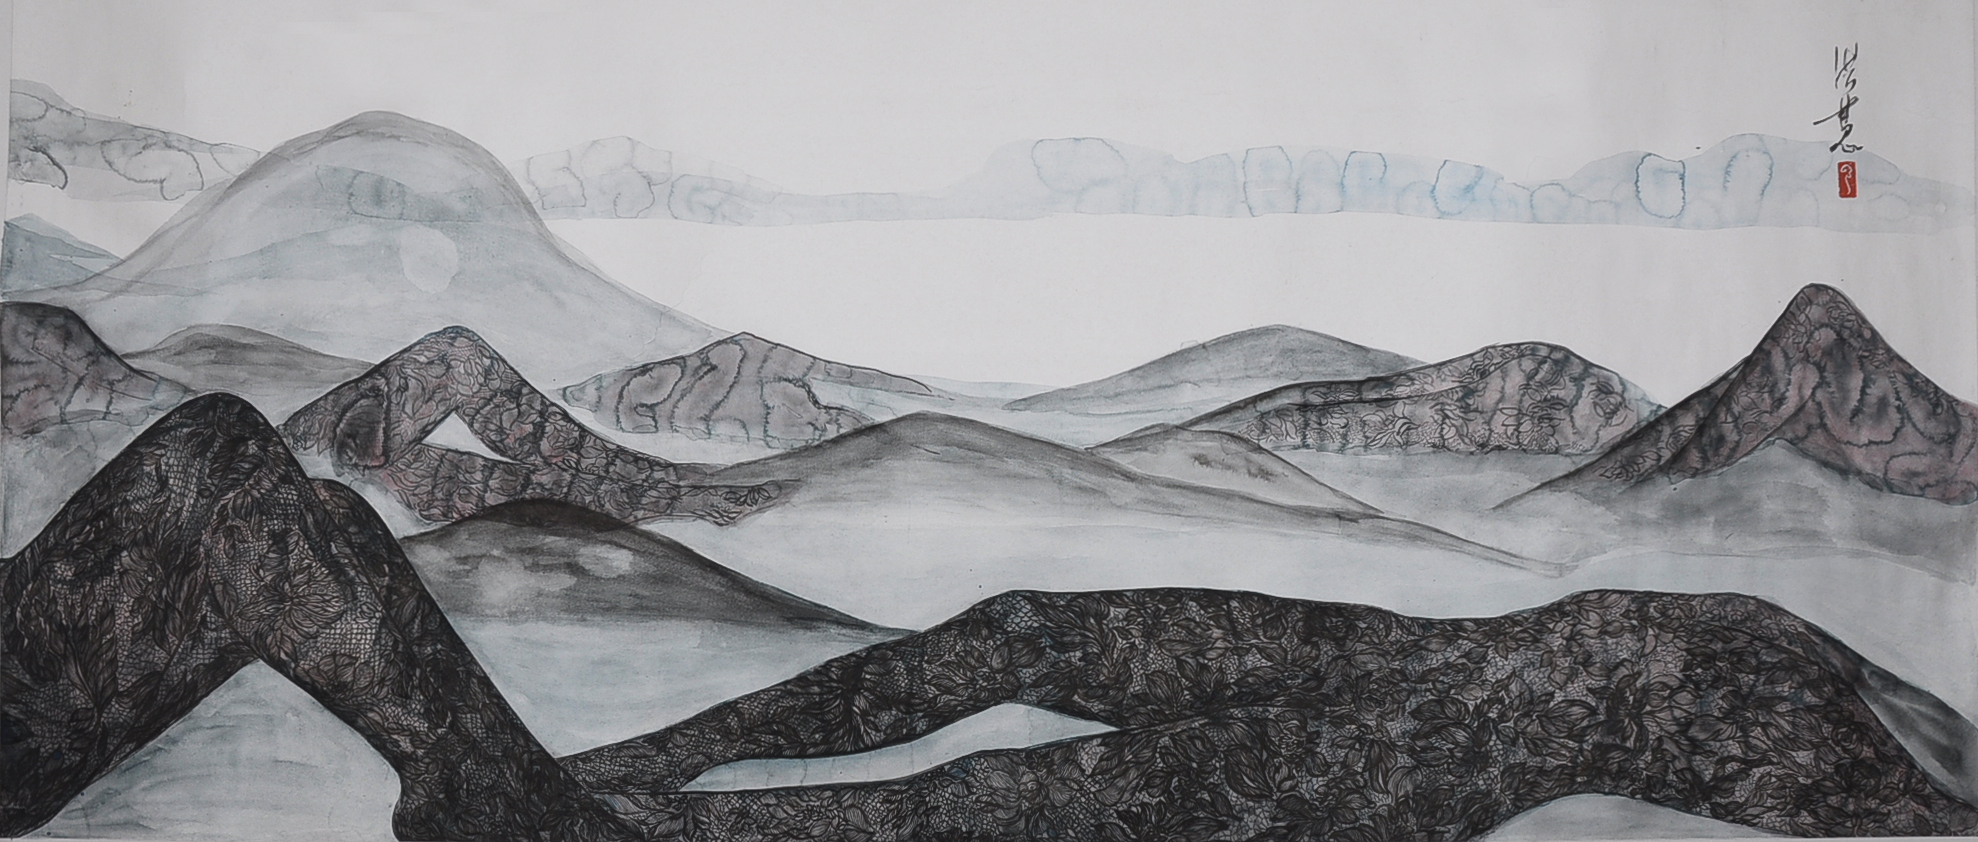 femenine landscape, ink and coloron silver rice paper, 170X70cm, 2019